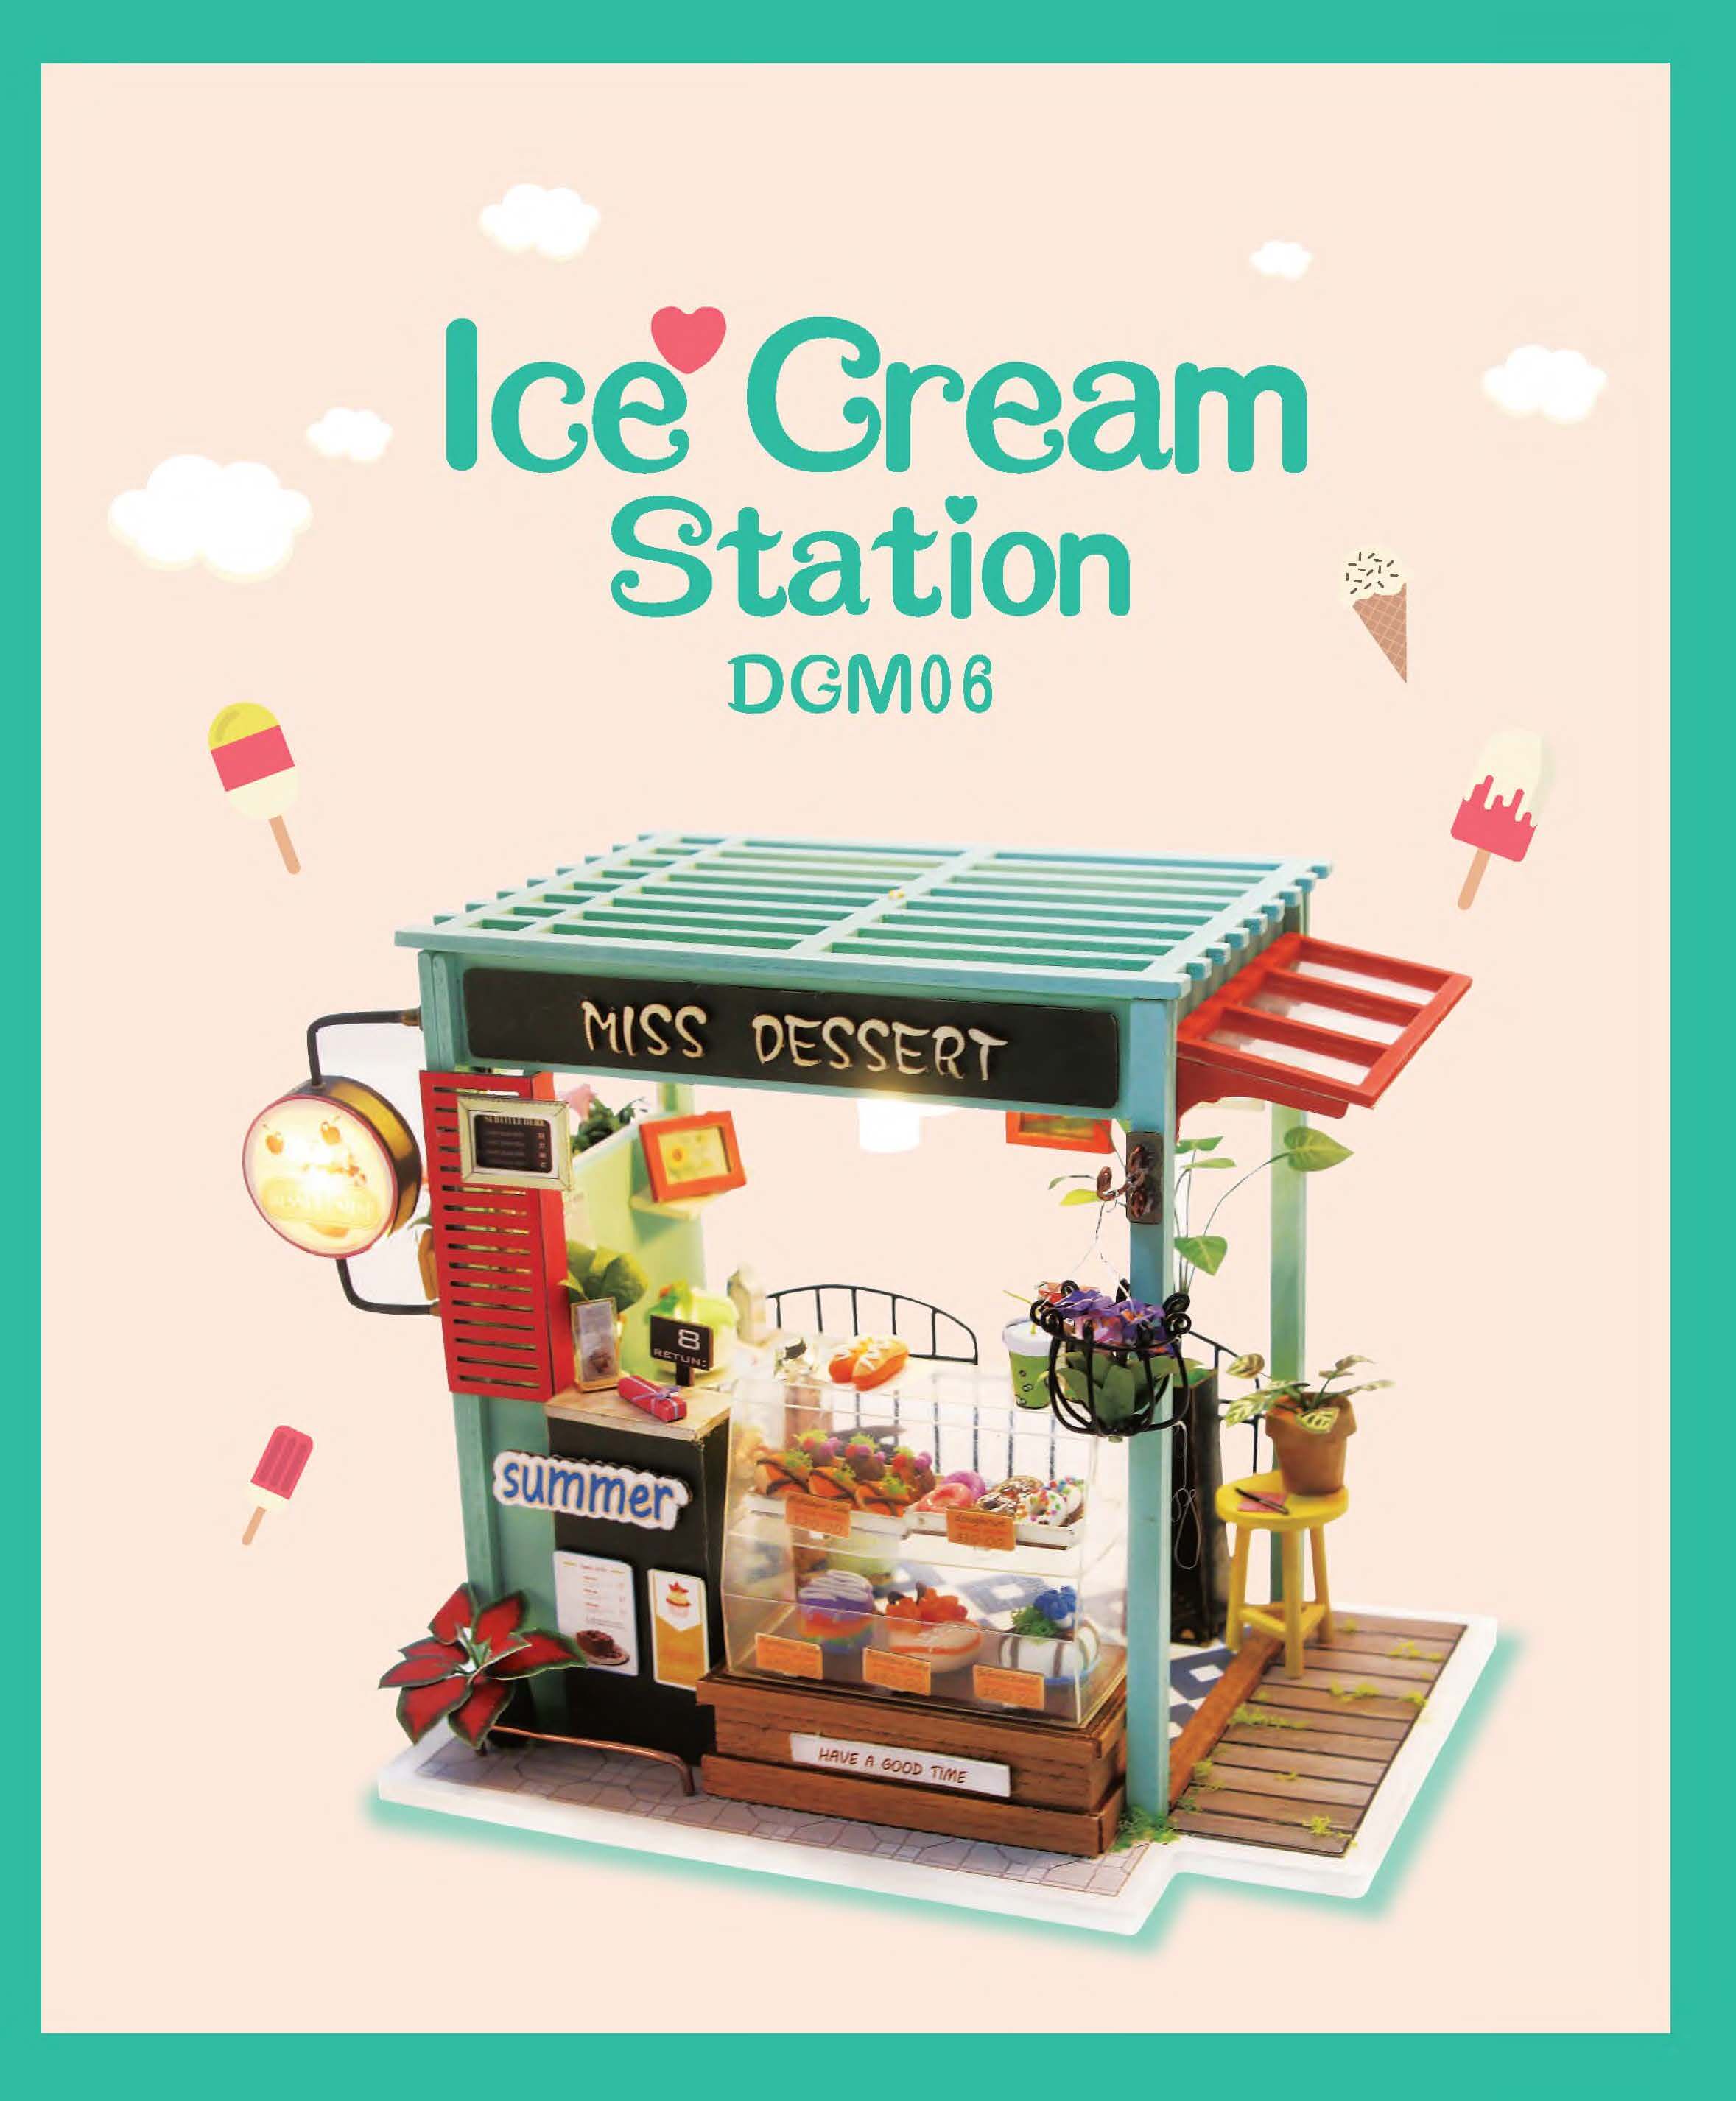 RDGM06 - Ice Cream Station Manual